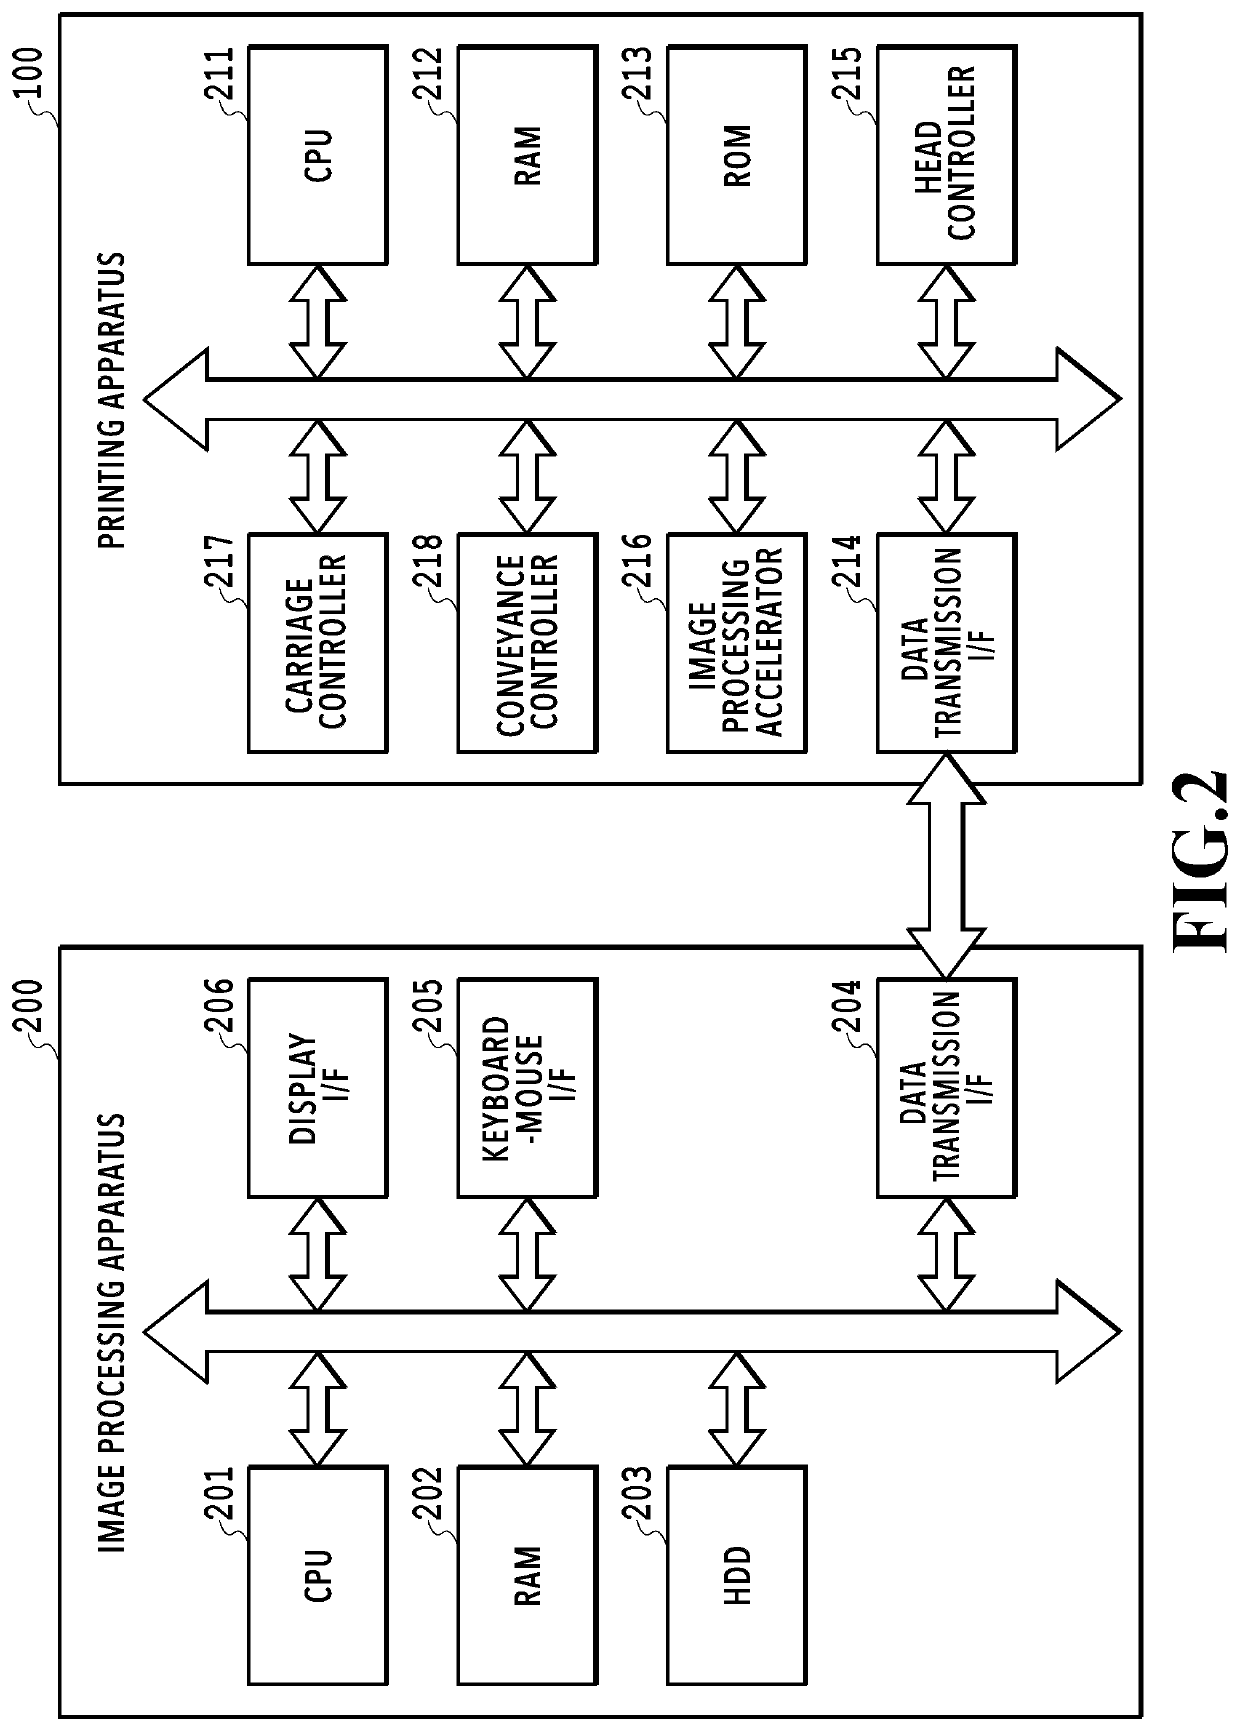 Image processing apparatus, image processing method, and storage medium